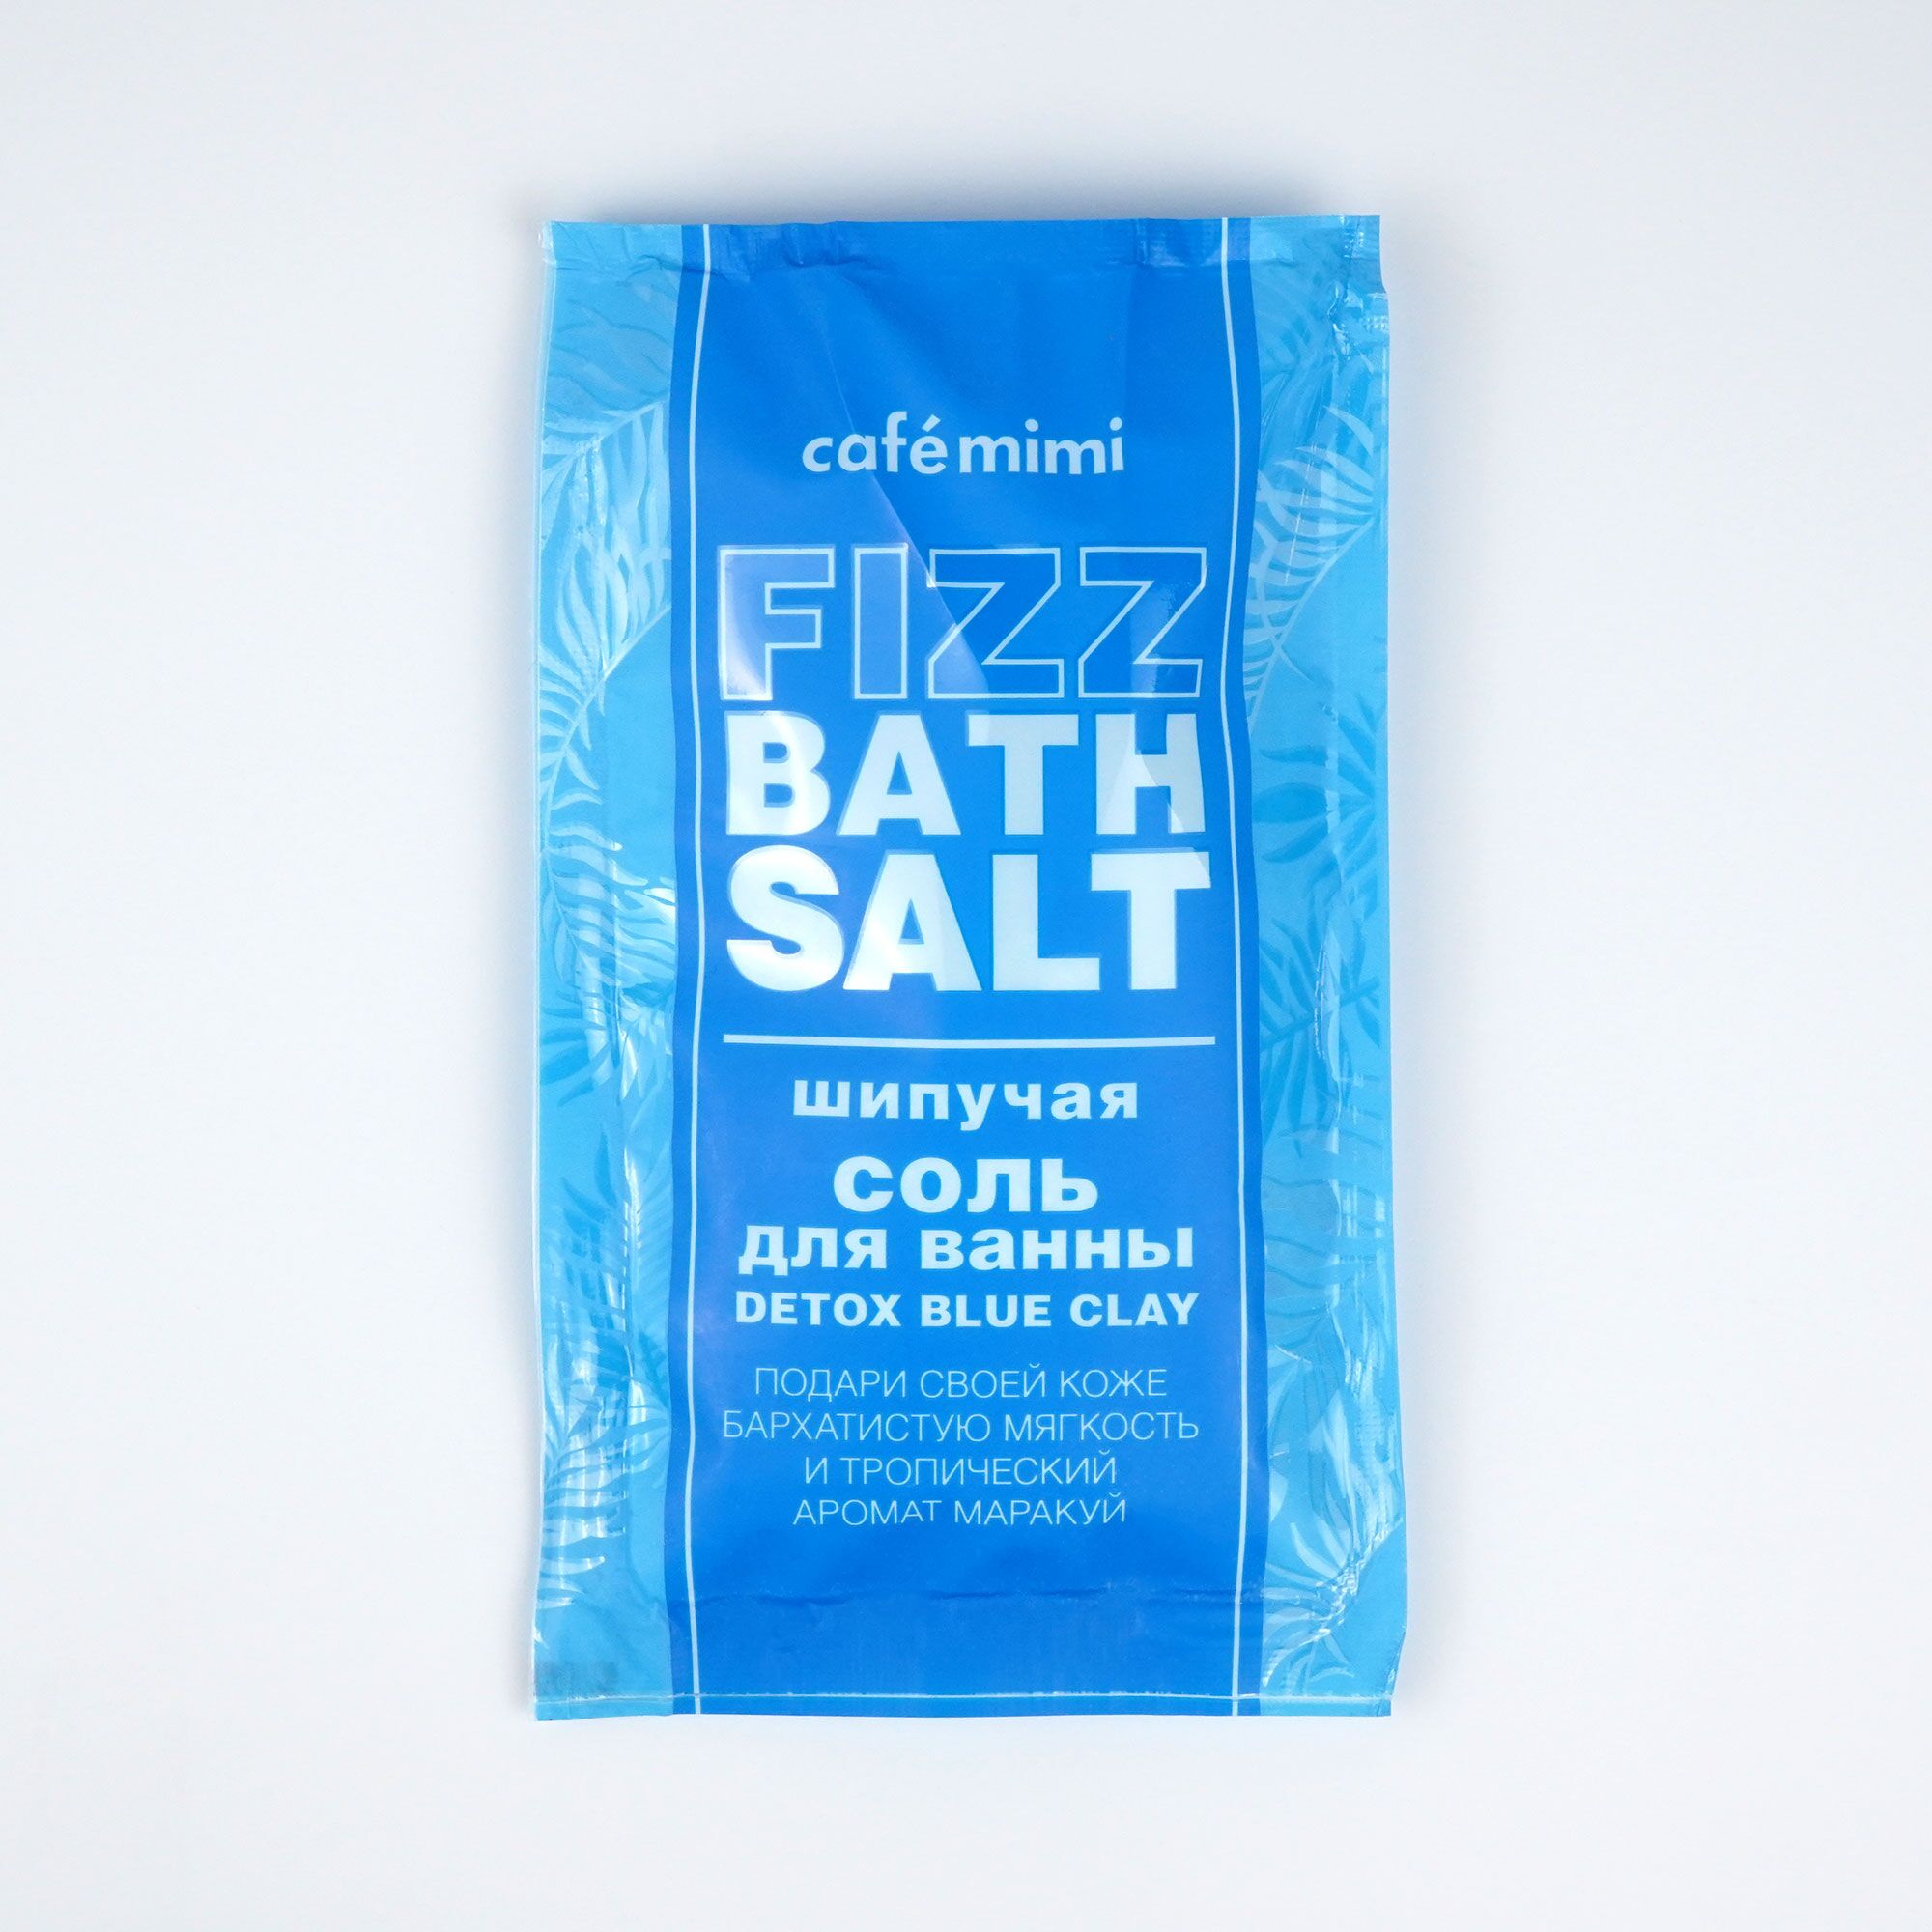 Шипучая соль для ванны Cafemimi DETOX BLUE CLAY